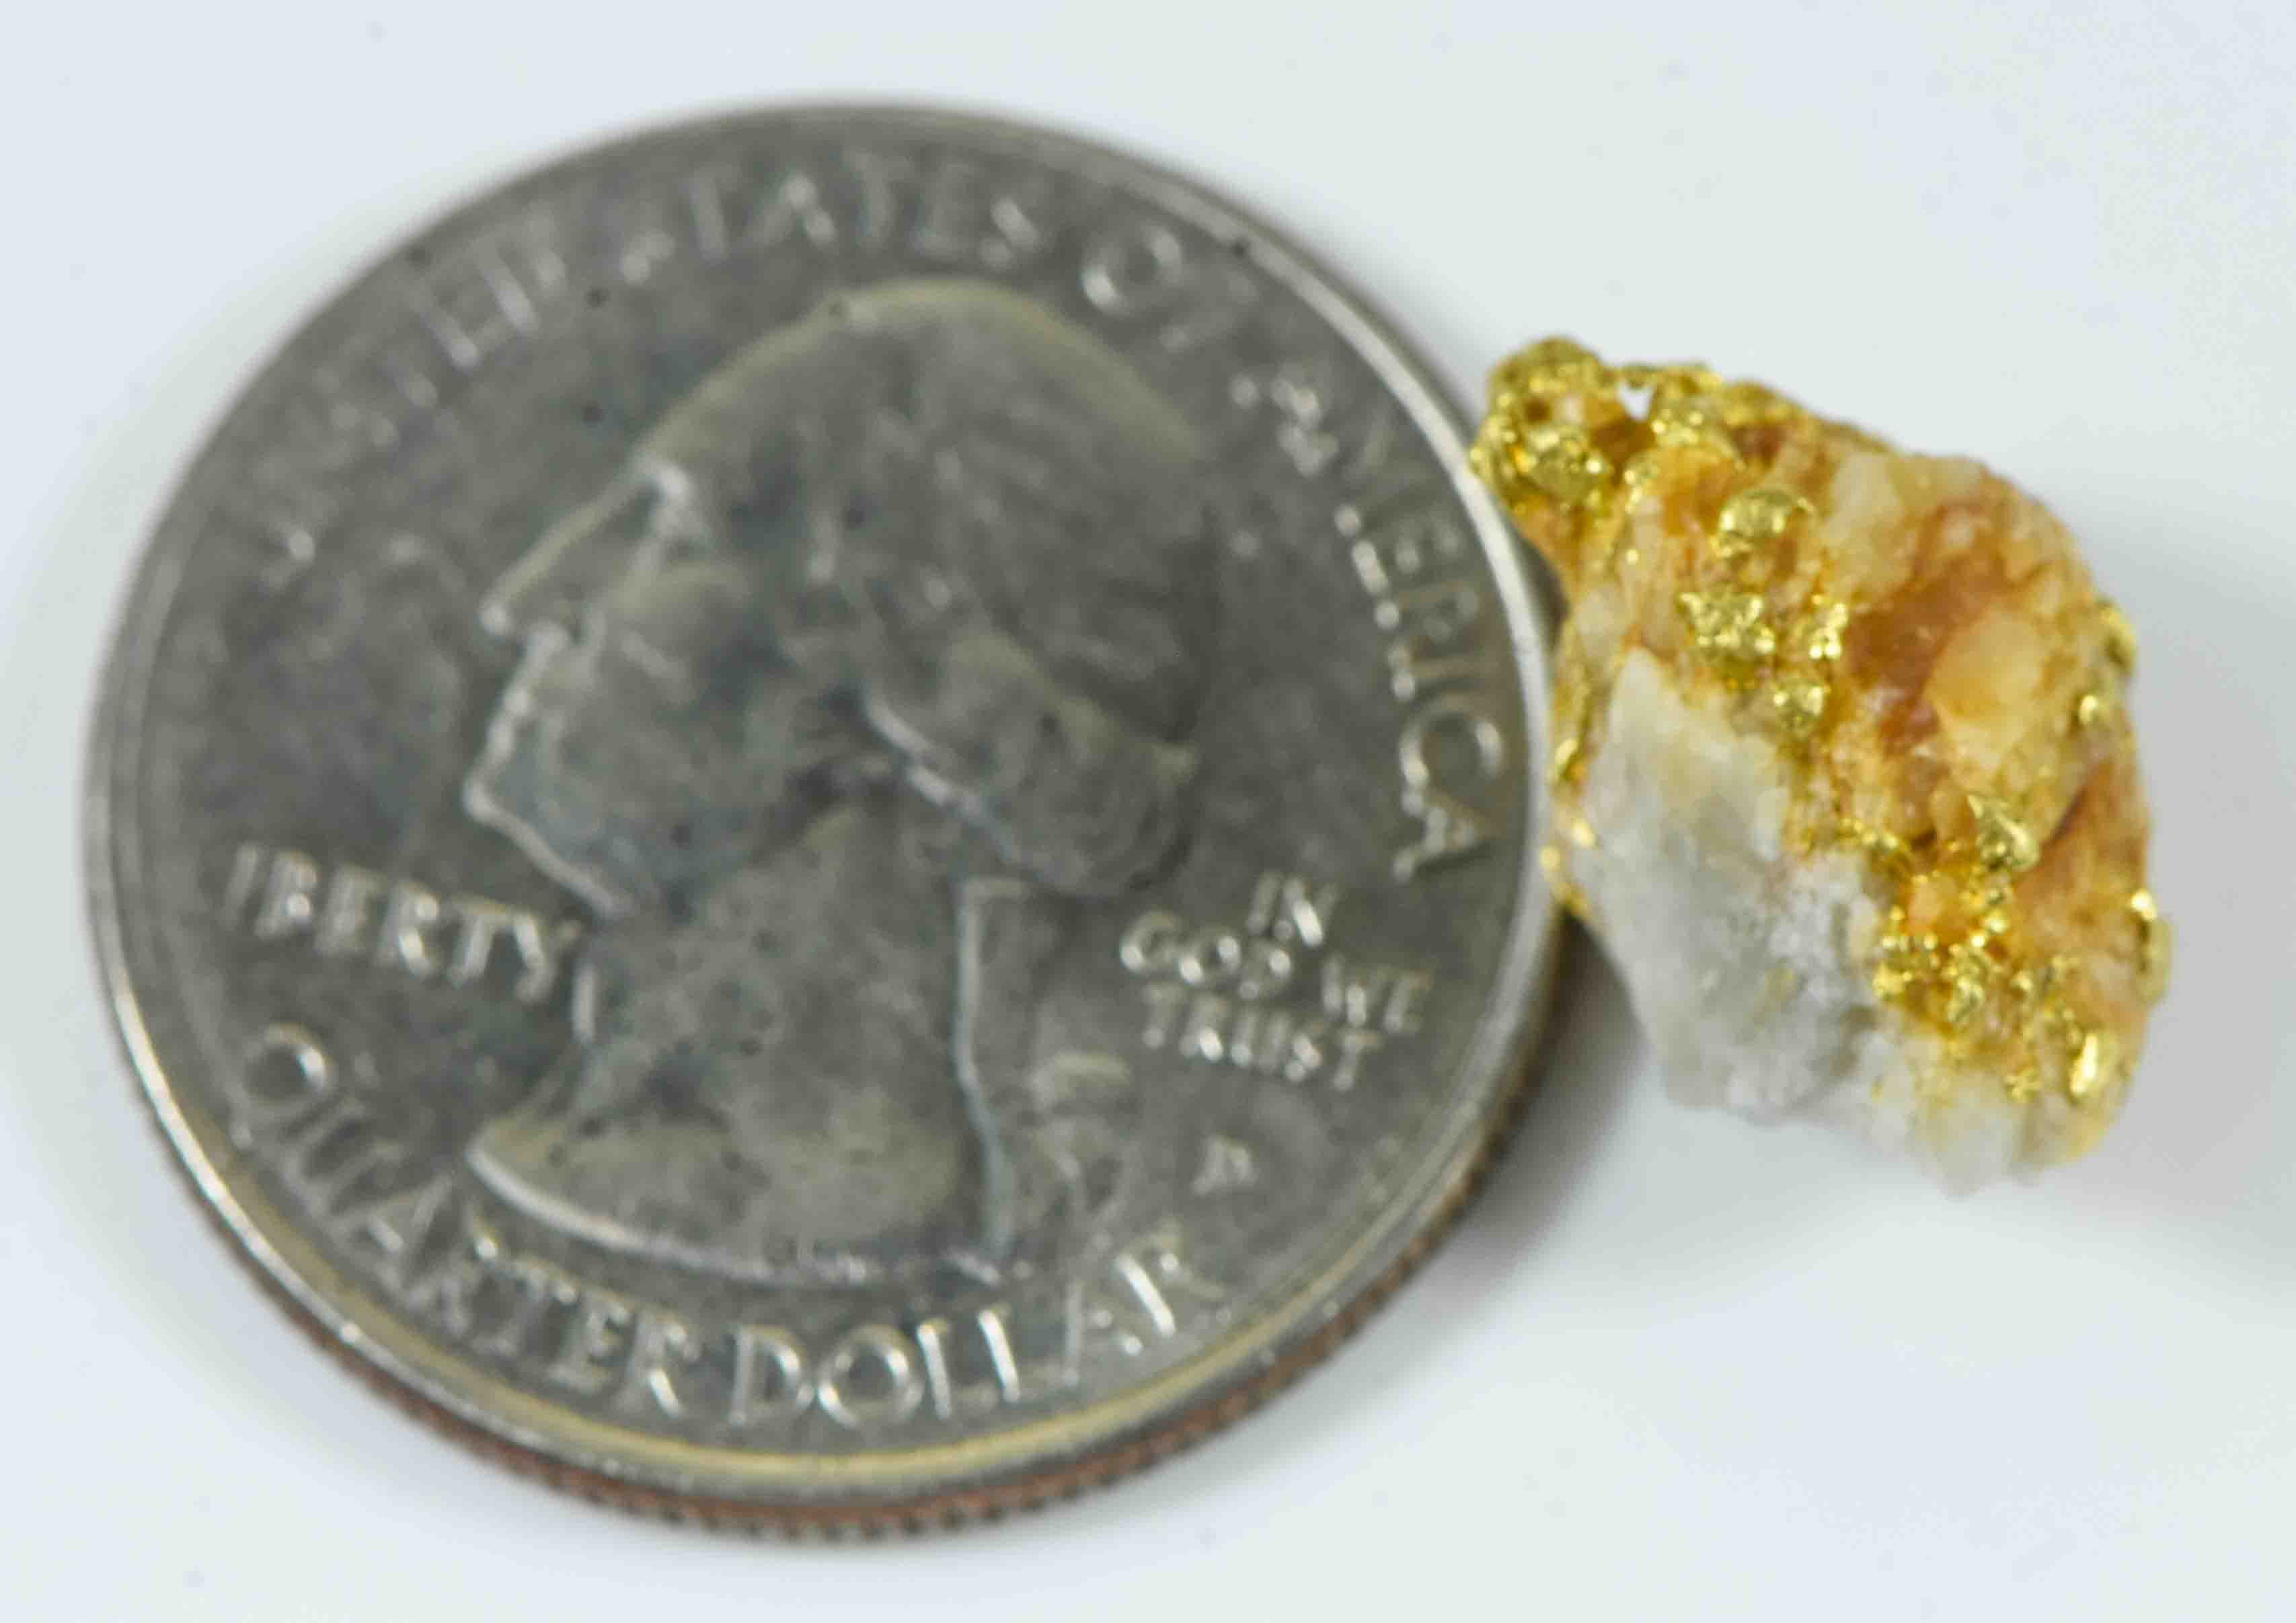 QN-43 "Alaskan BC Gold Nuggets with Quartz" Genuine 3.47 Grams